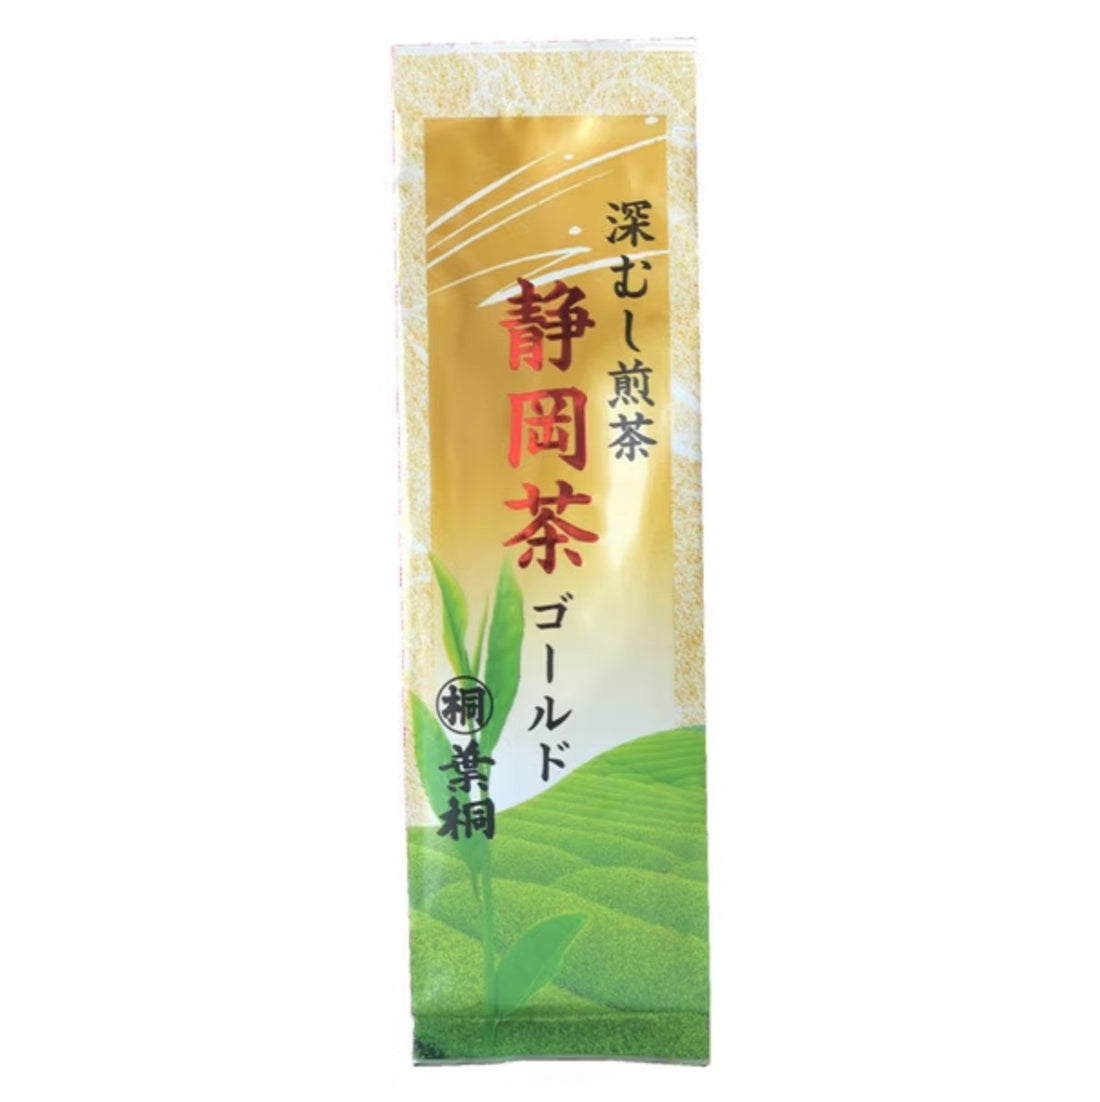 Hagiri Shizuoka Tea Gold 100g - NihonMura